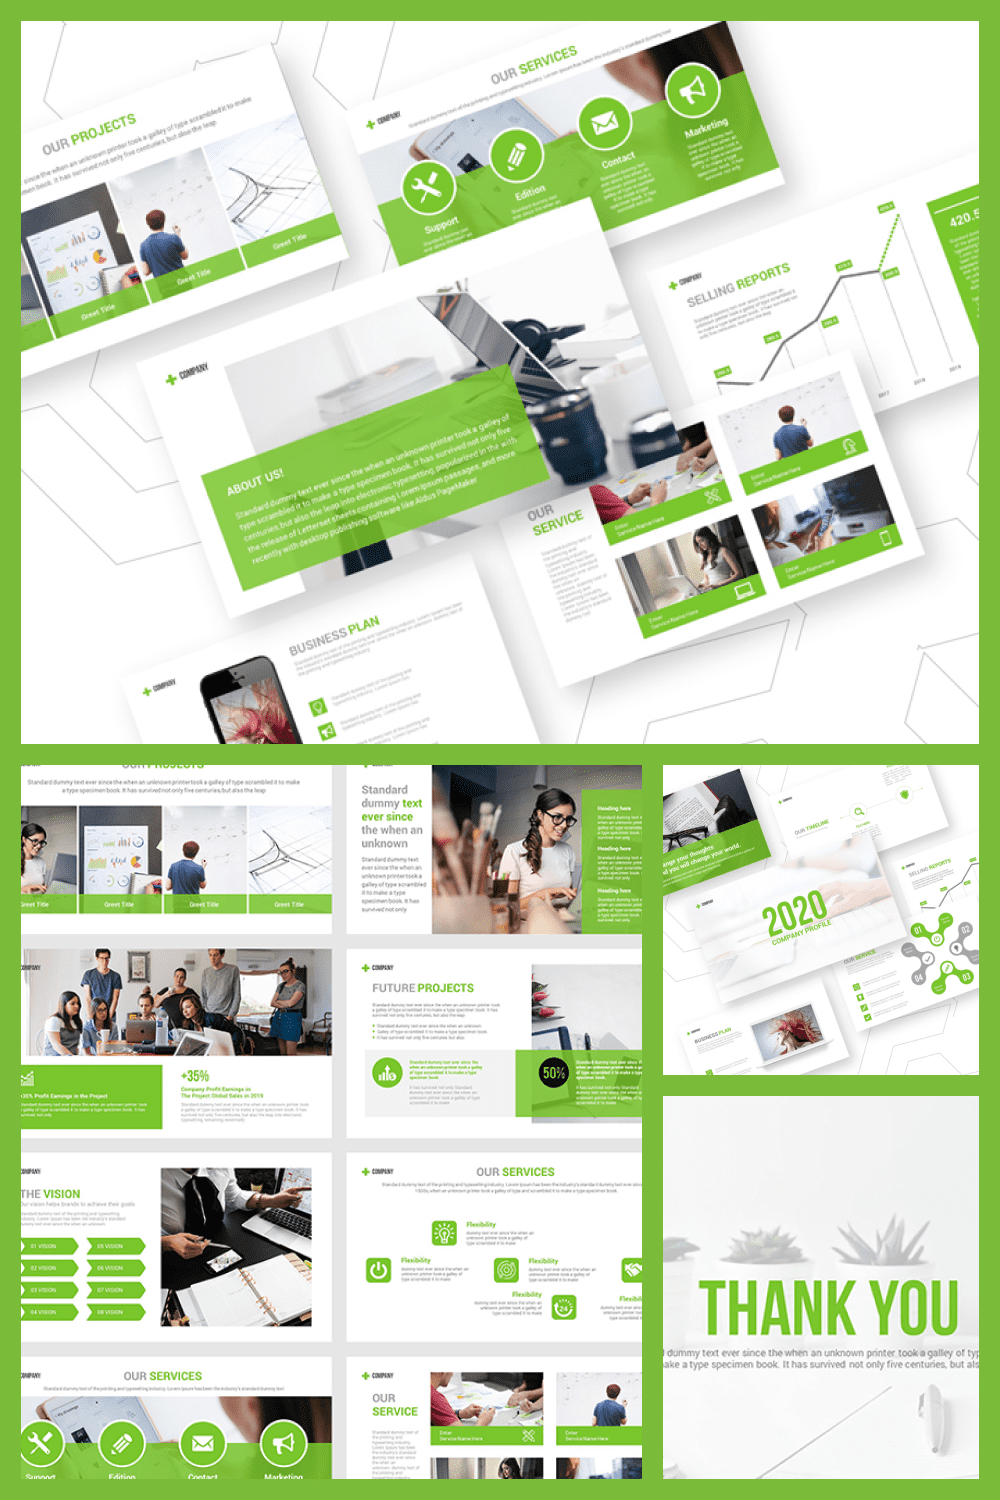 47 Slides Company Profile PowerPoint Template - MasterBundles - Pinterest Collage Image.